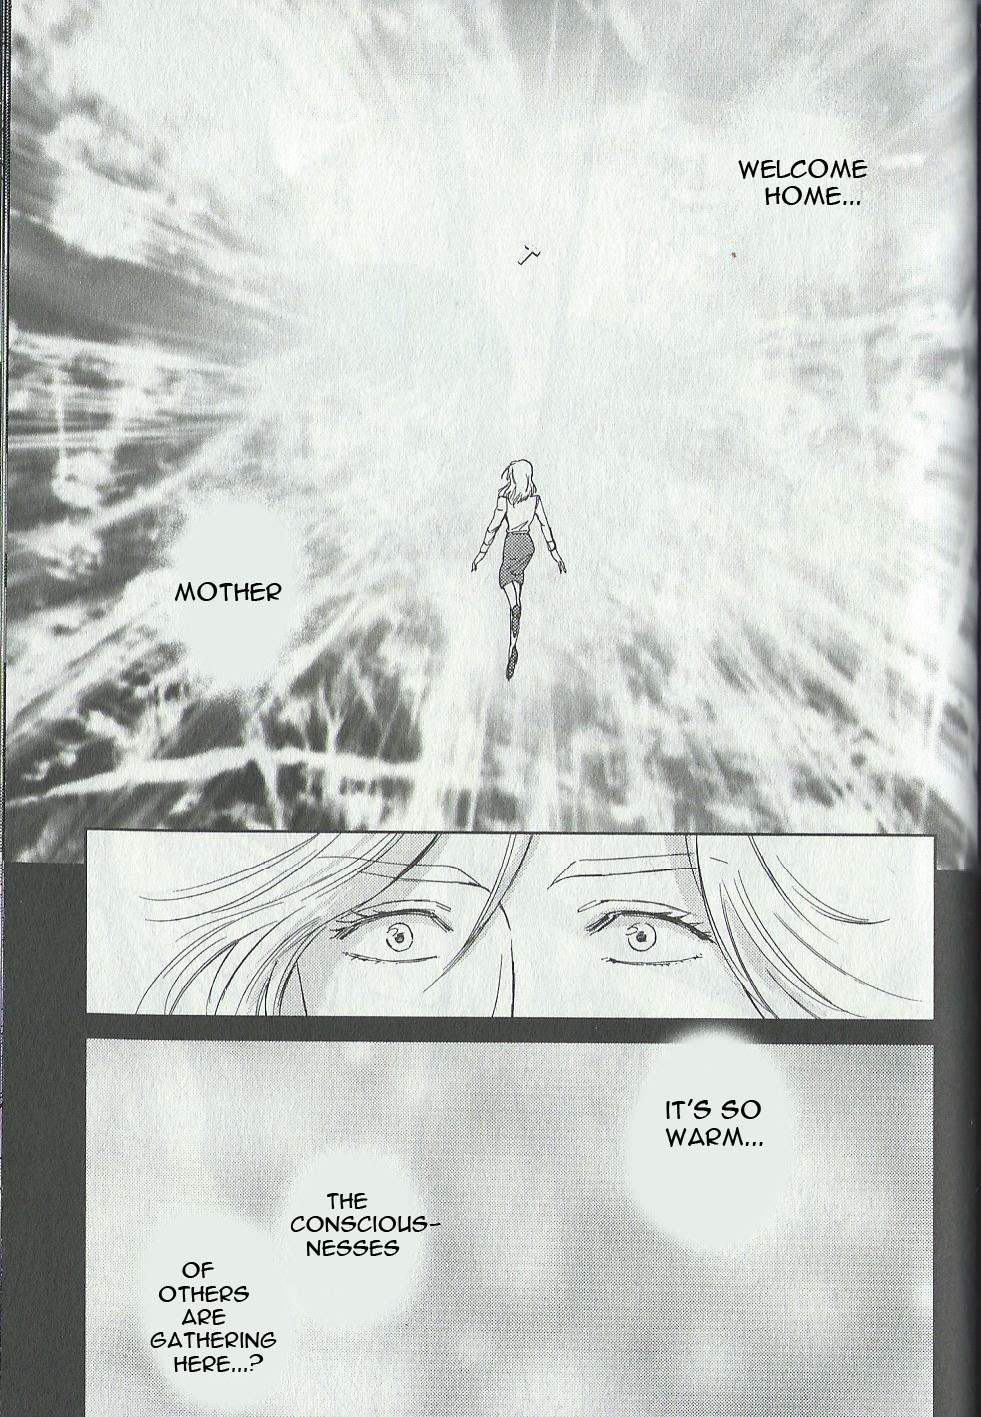 Kidou Senshi Gundam Gyakushuu no Char: Beyond the Time Vol. 2 Ch. 11 Psycofield